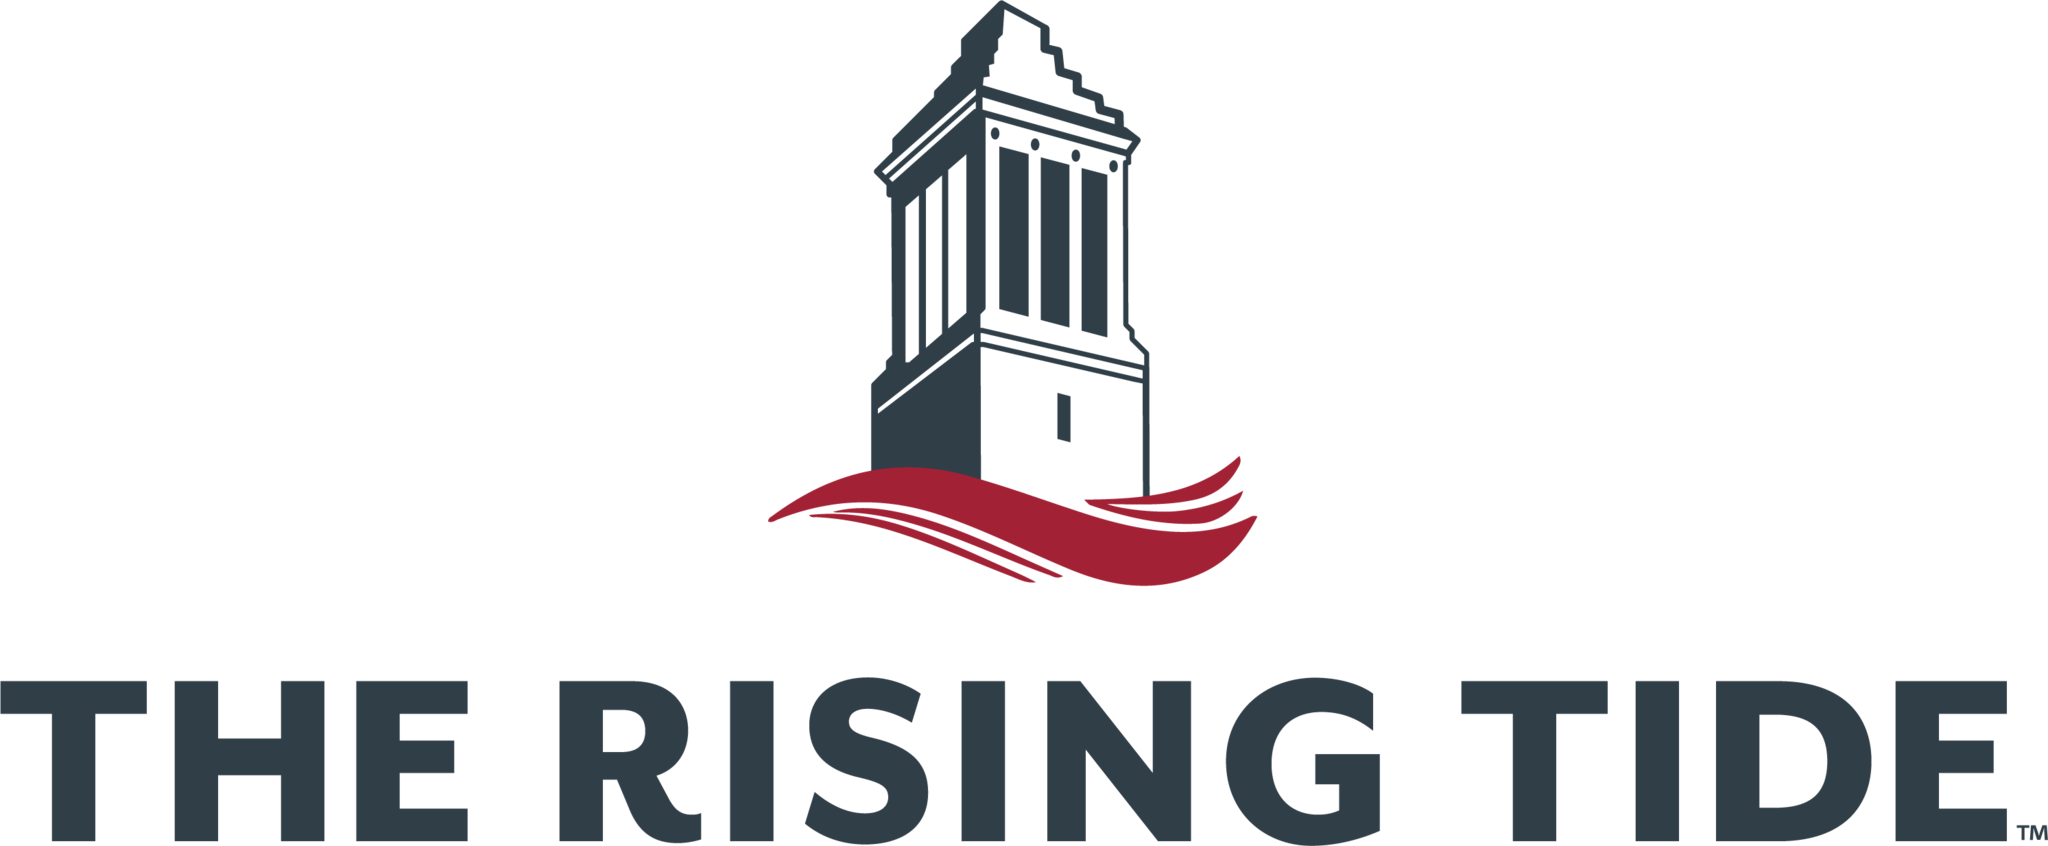 The Rising Tide logo